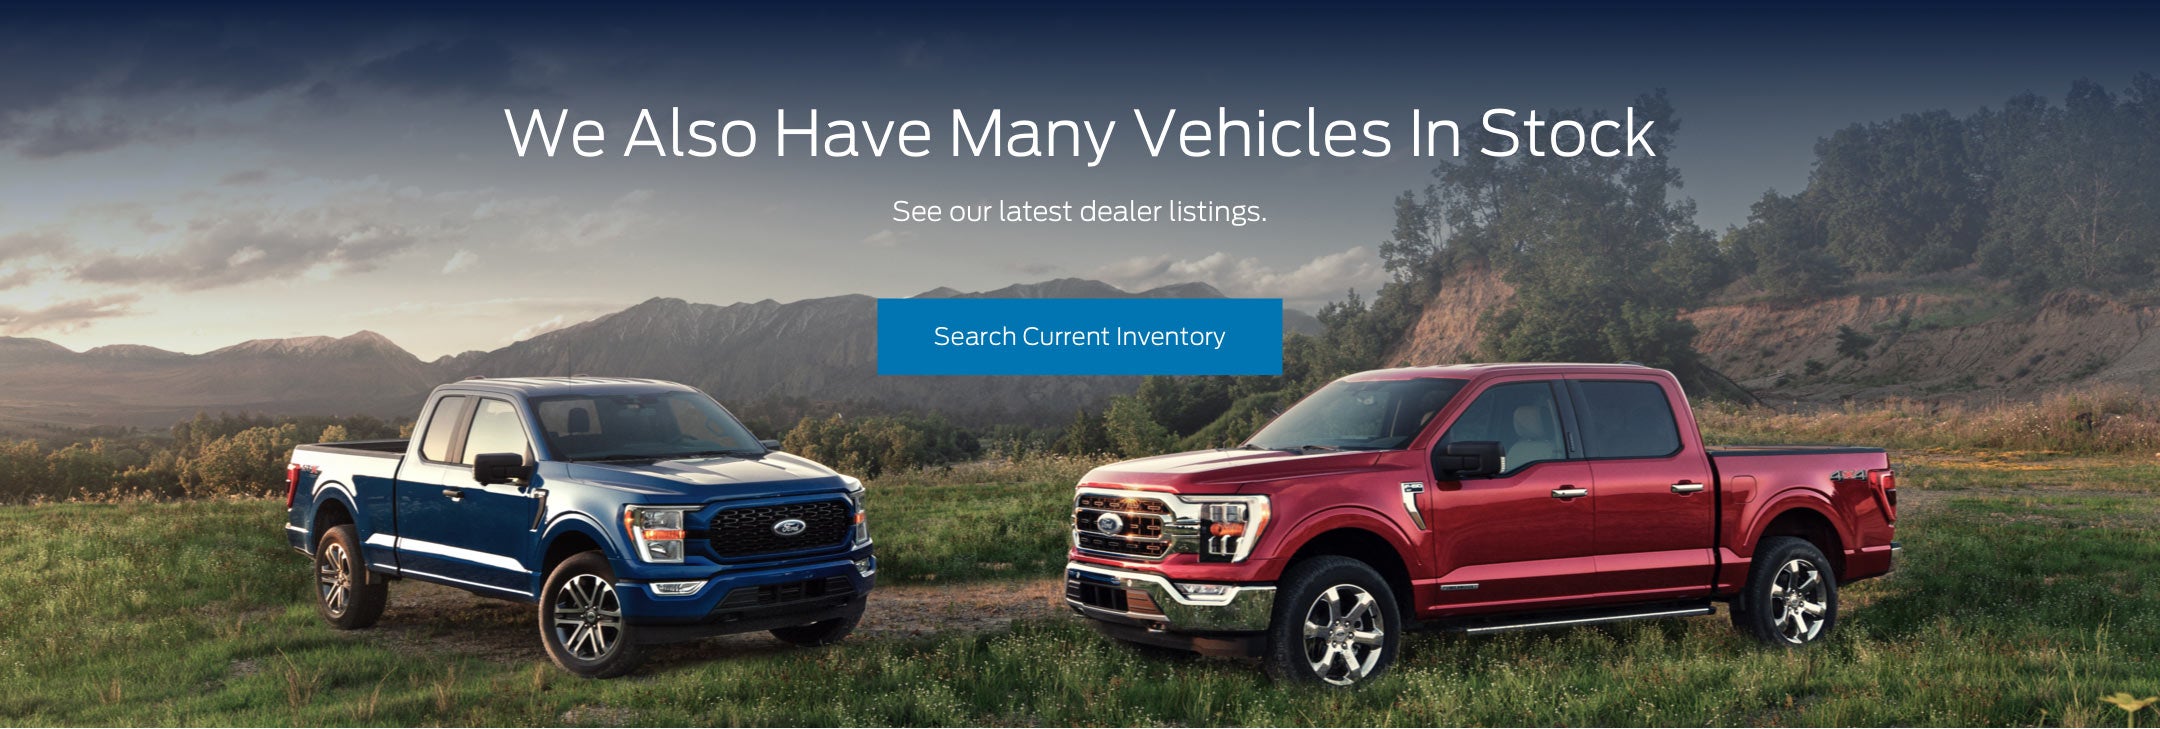 Ford vehicles in stock | Kraig Ford in Oskaloosa IA